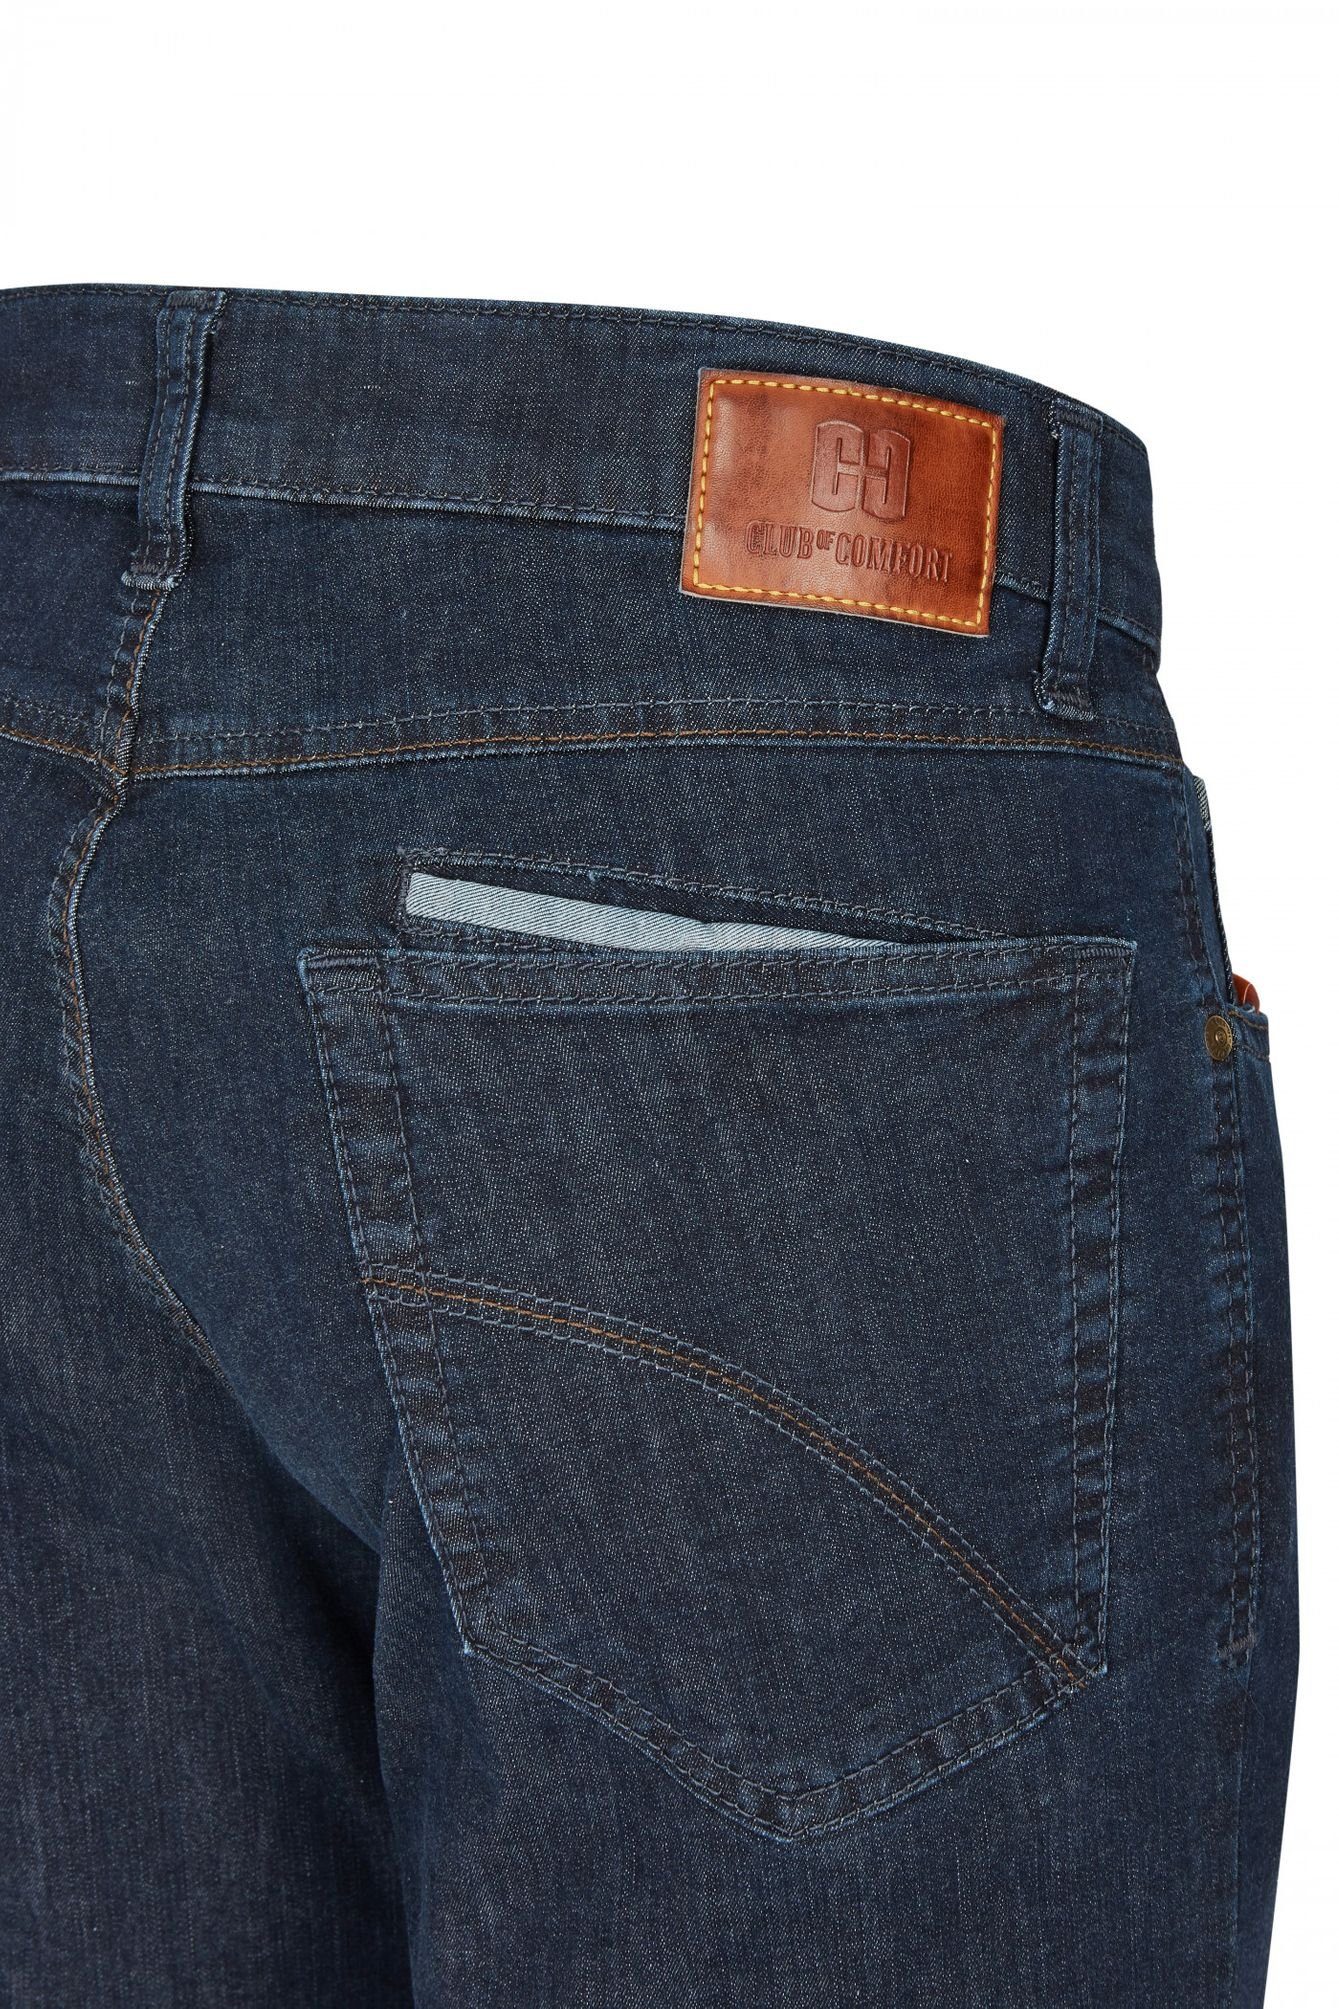 Comfort Henry-X 5-Pocket-Jeans Club Dunkelblau (41) of